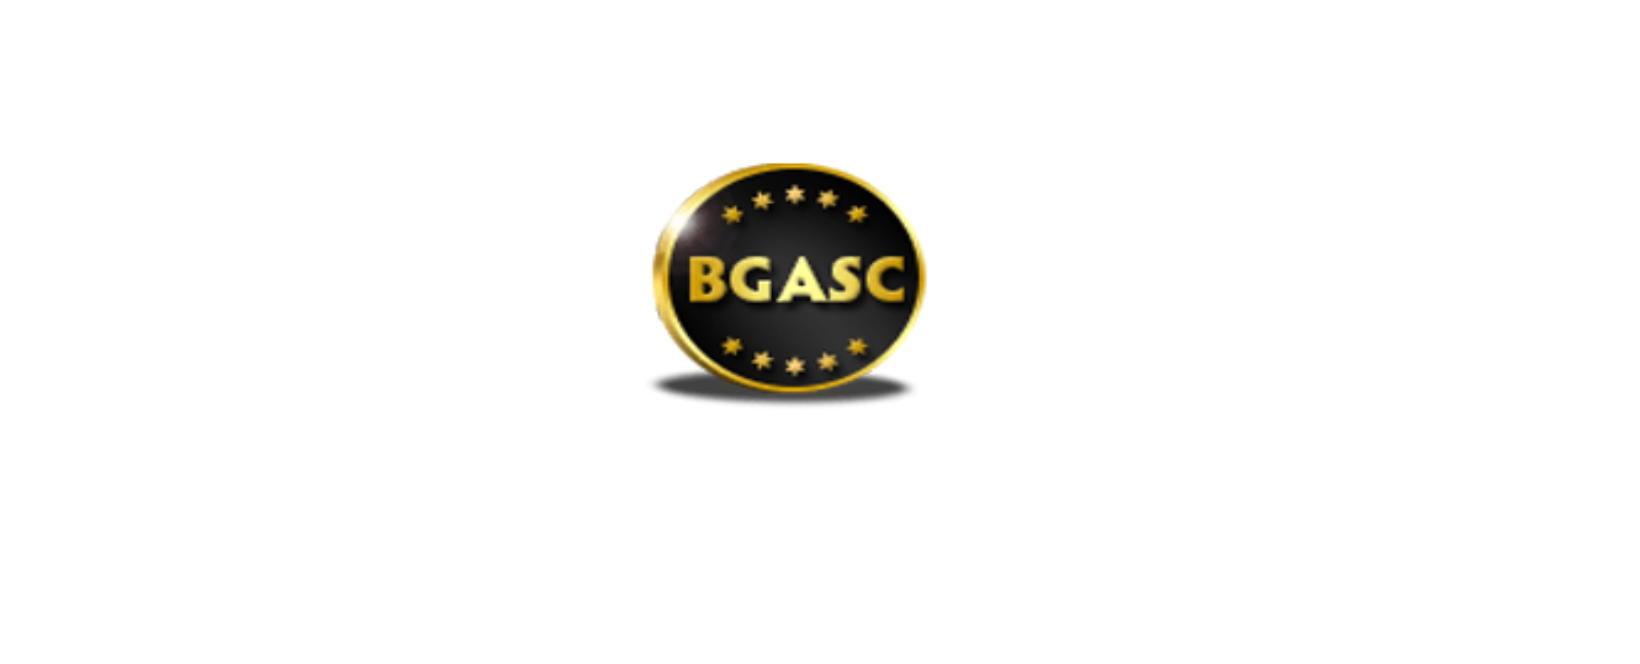 BGASC Discount Code 2023